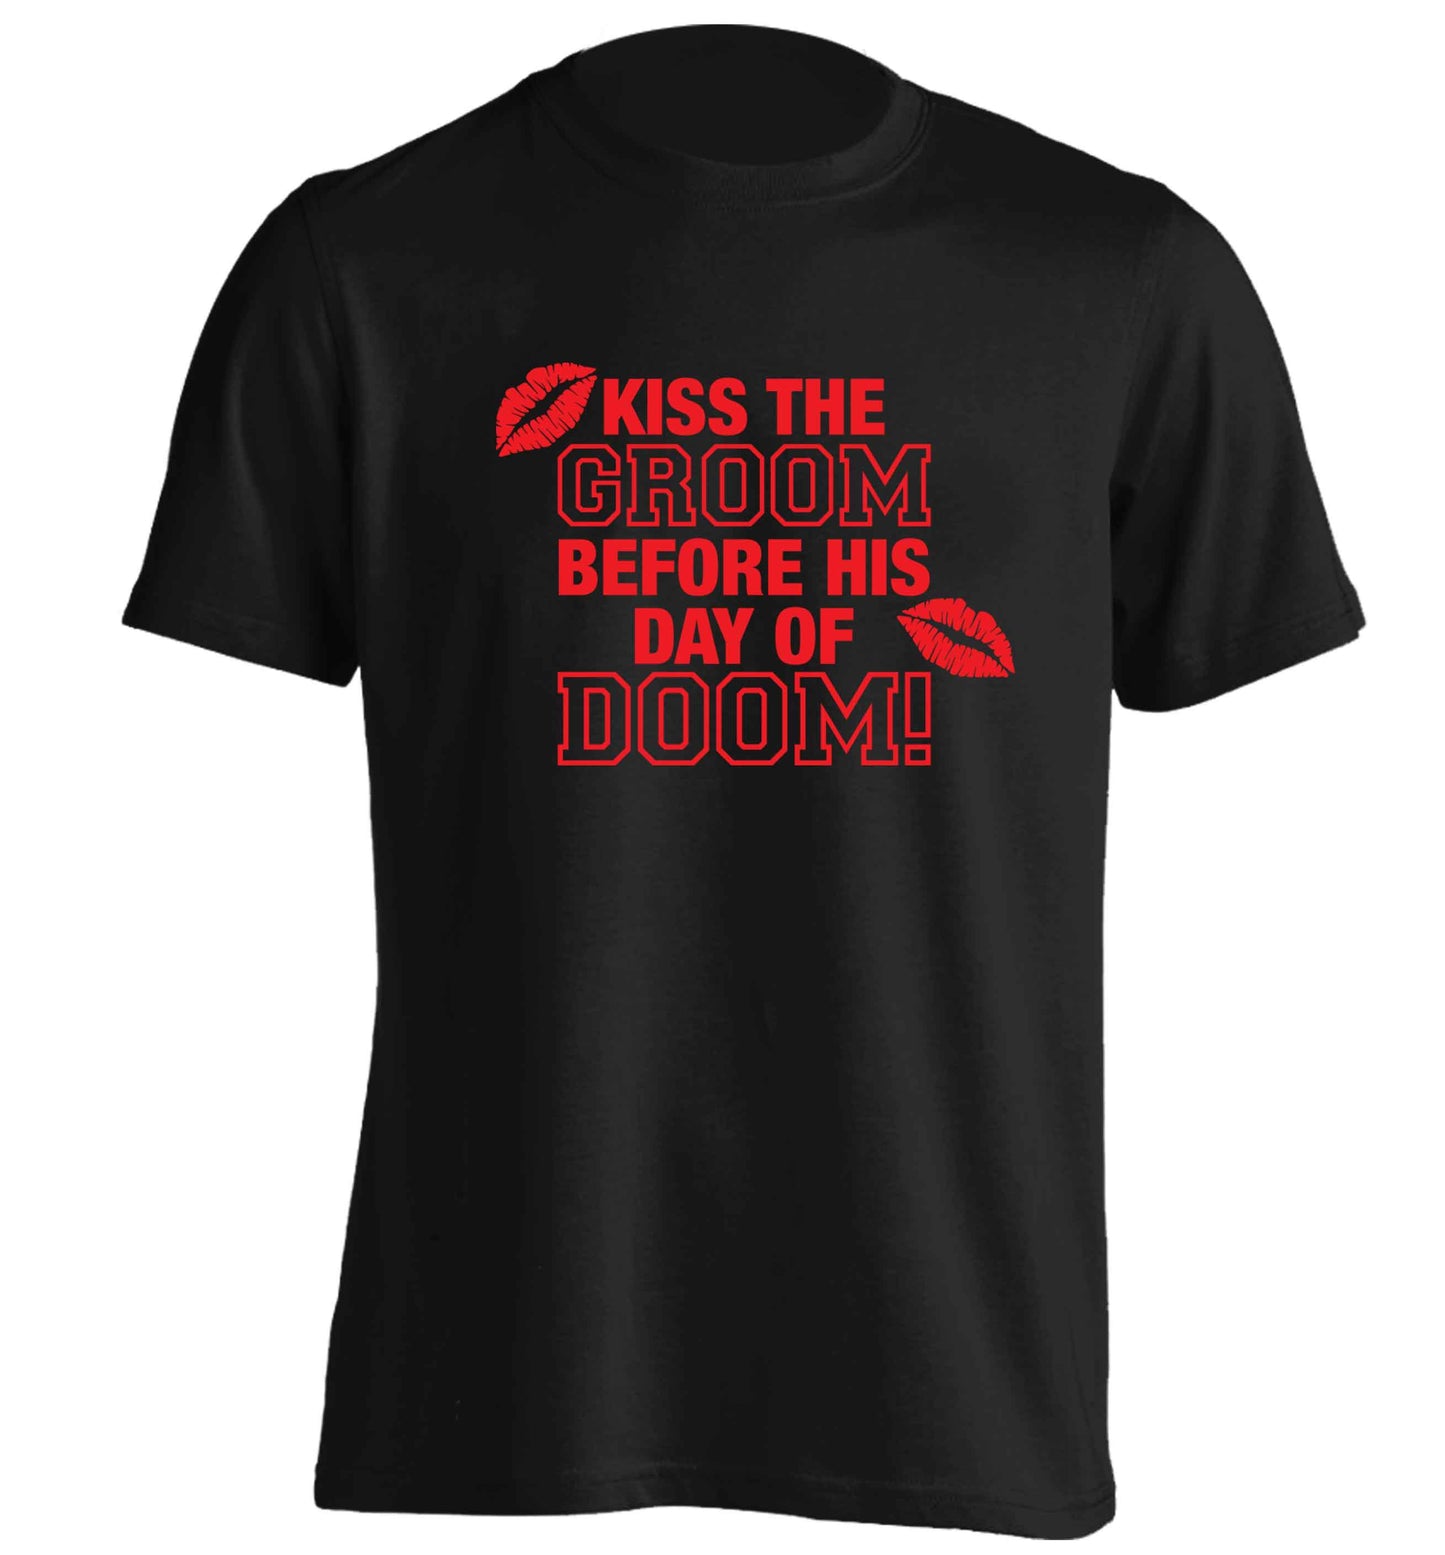 Kiss the groom before his day of doom! adults unisex black Tshirt 2XL